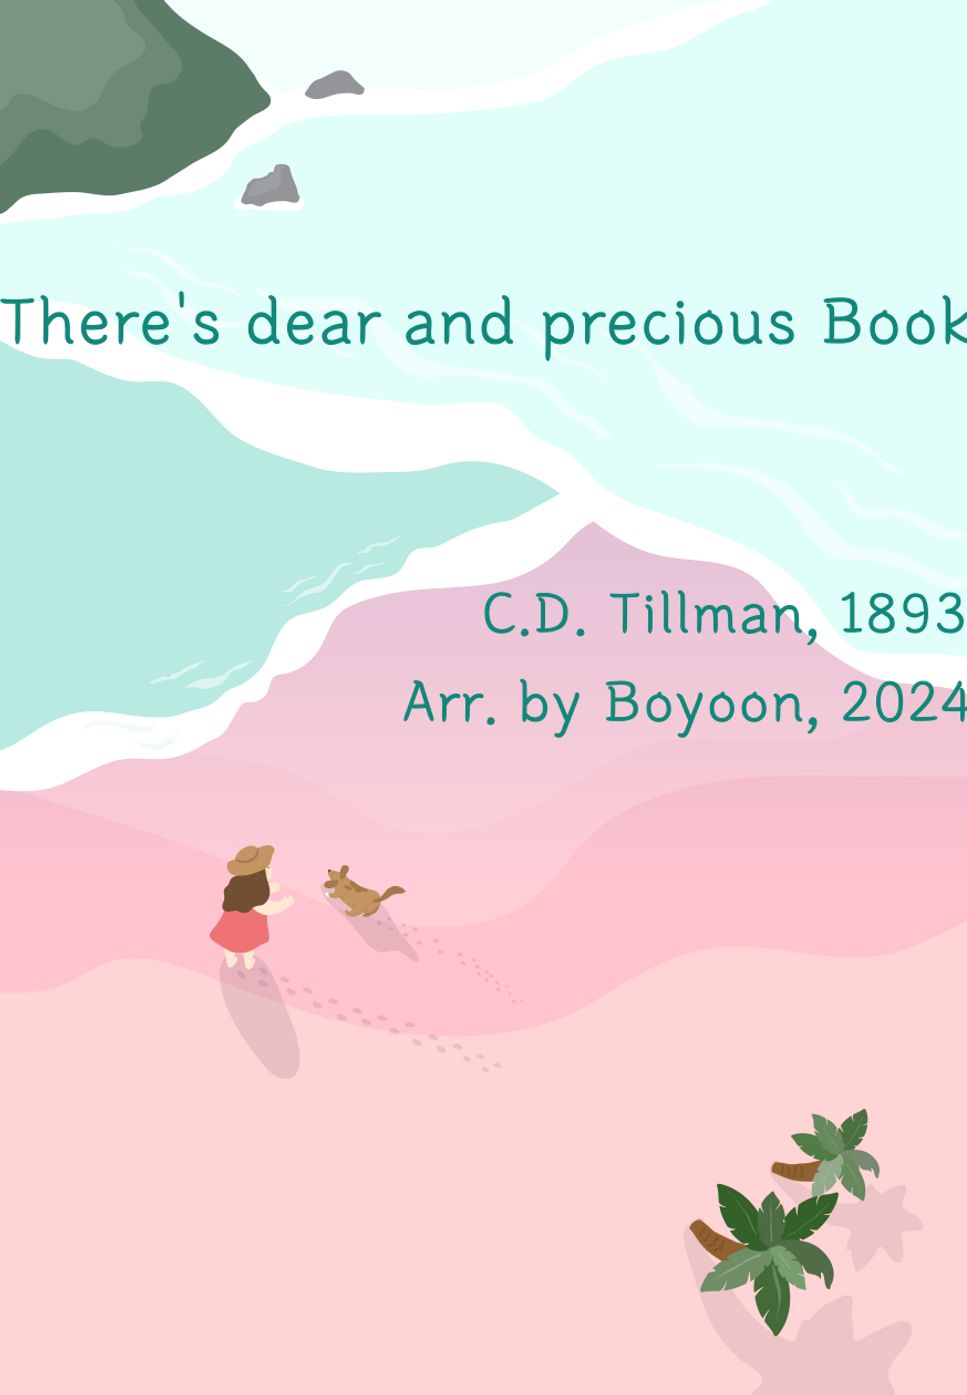 C.D. Tillman - There's a dear and precious Book by Boyoon